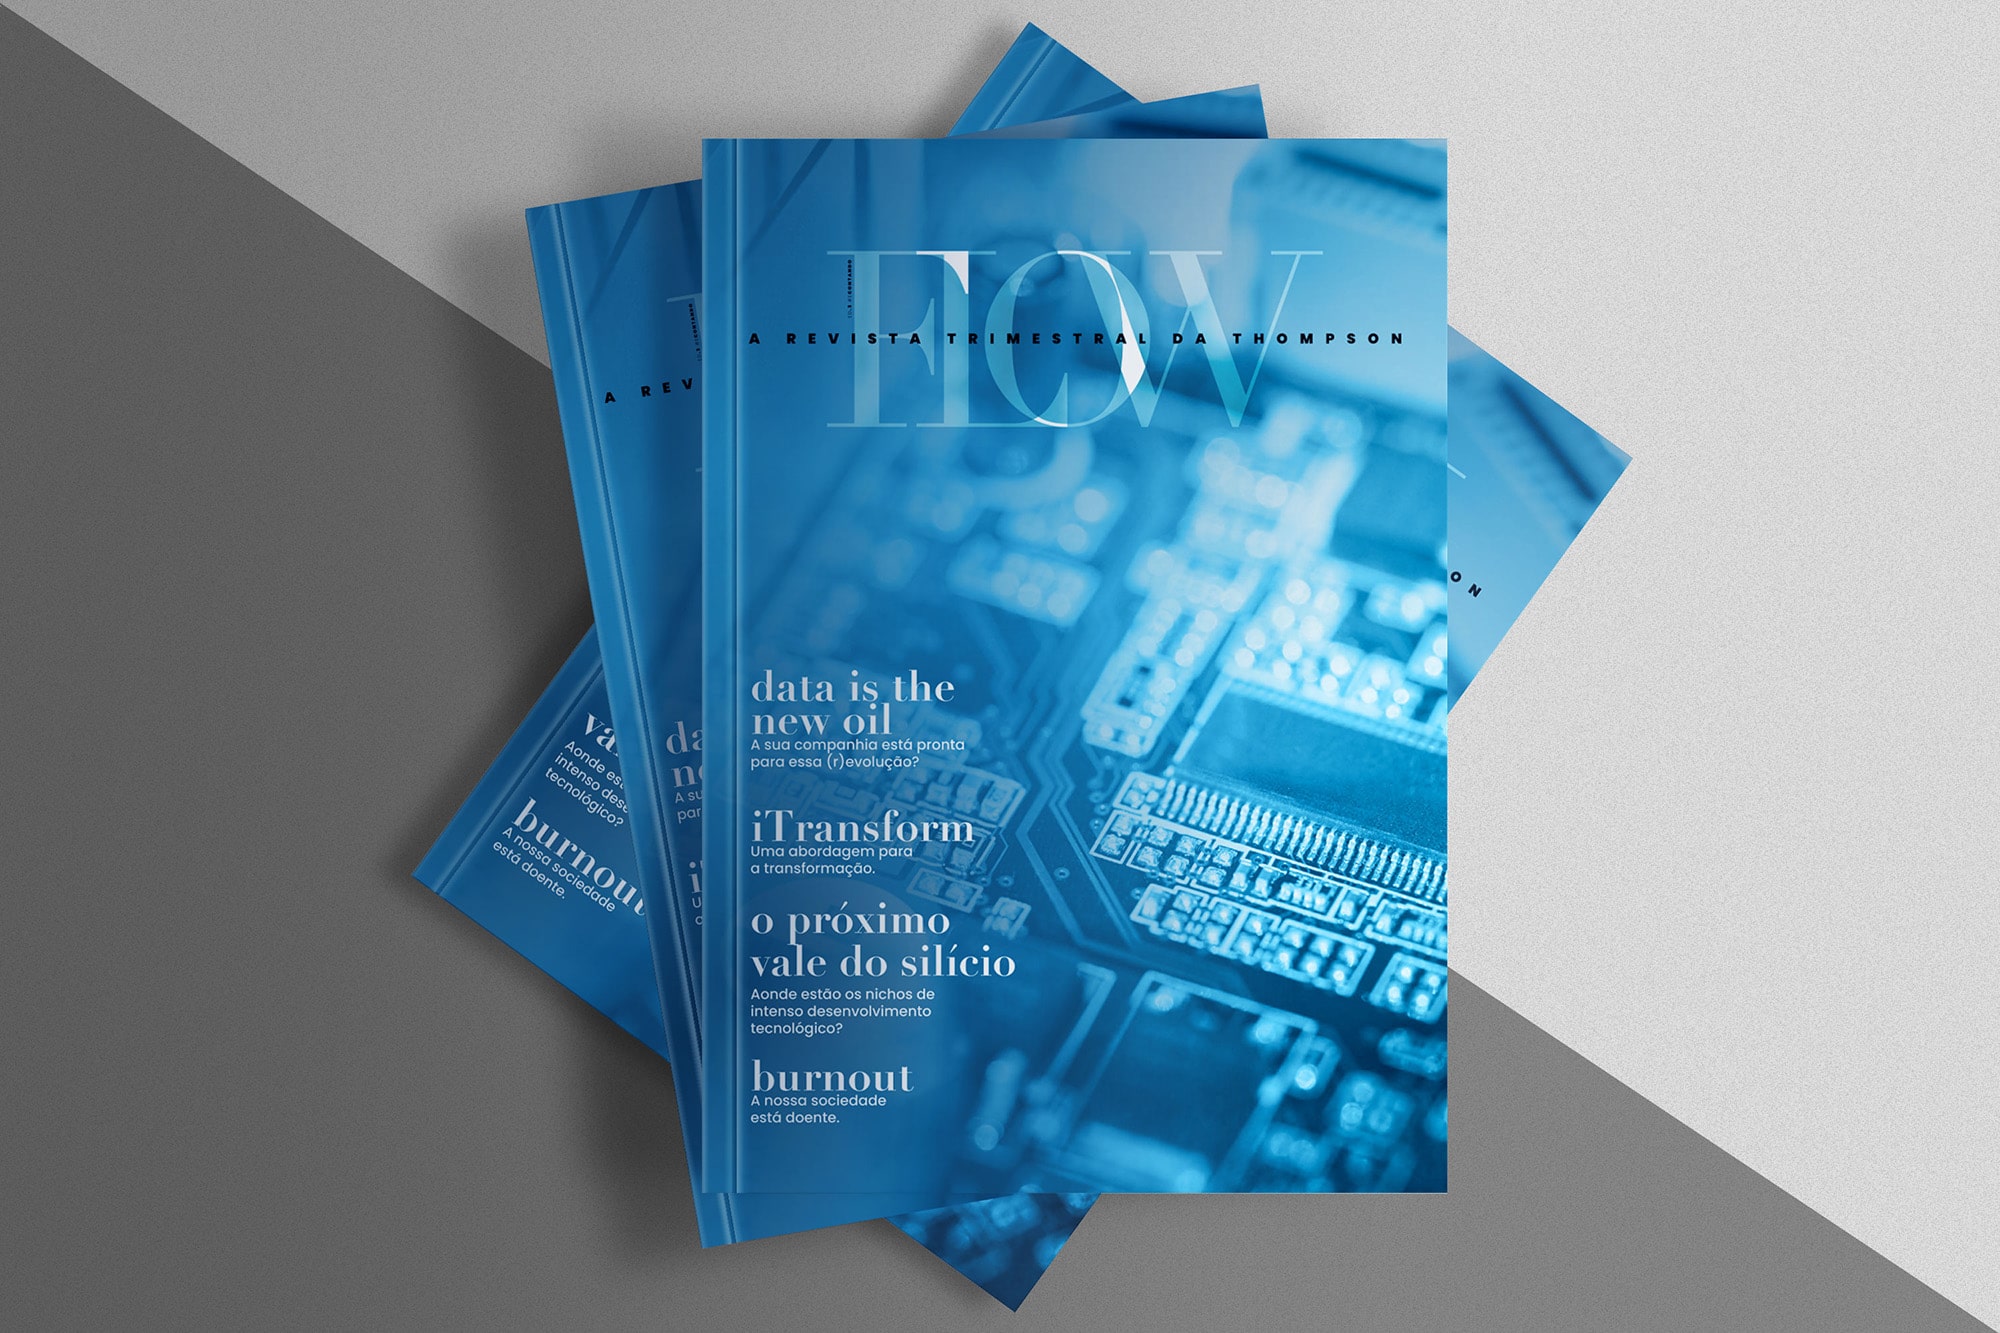 revista-flow-3-para-empresas-consultoria-em-gestao-empresarial-thompson-management-horizons-min